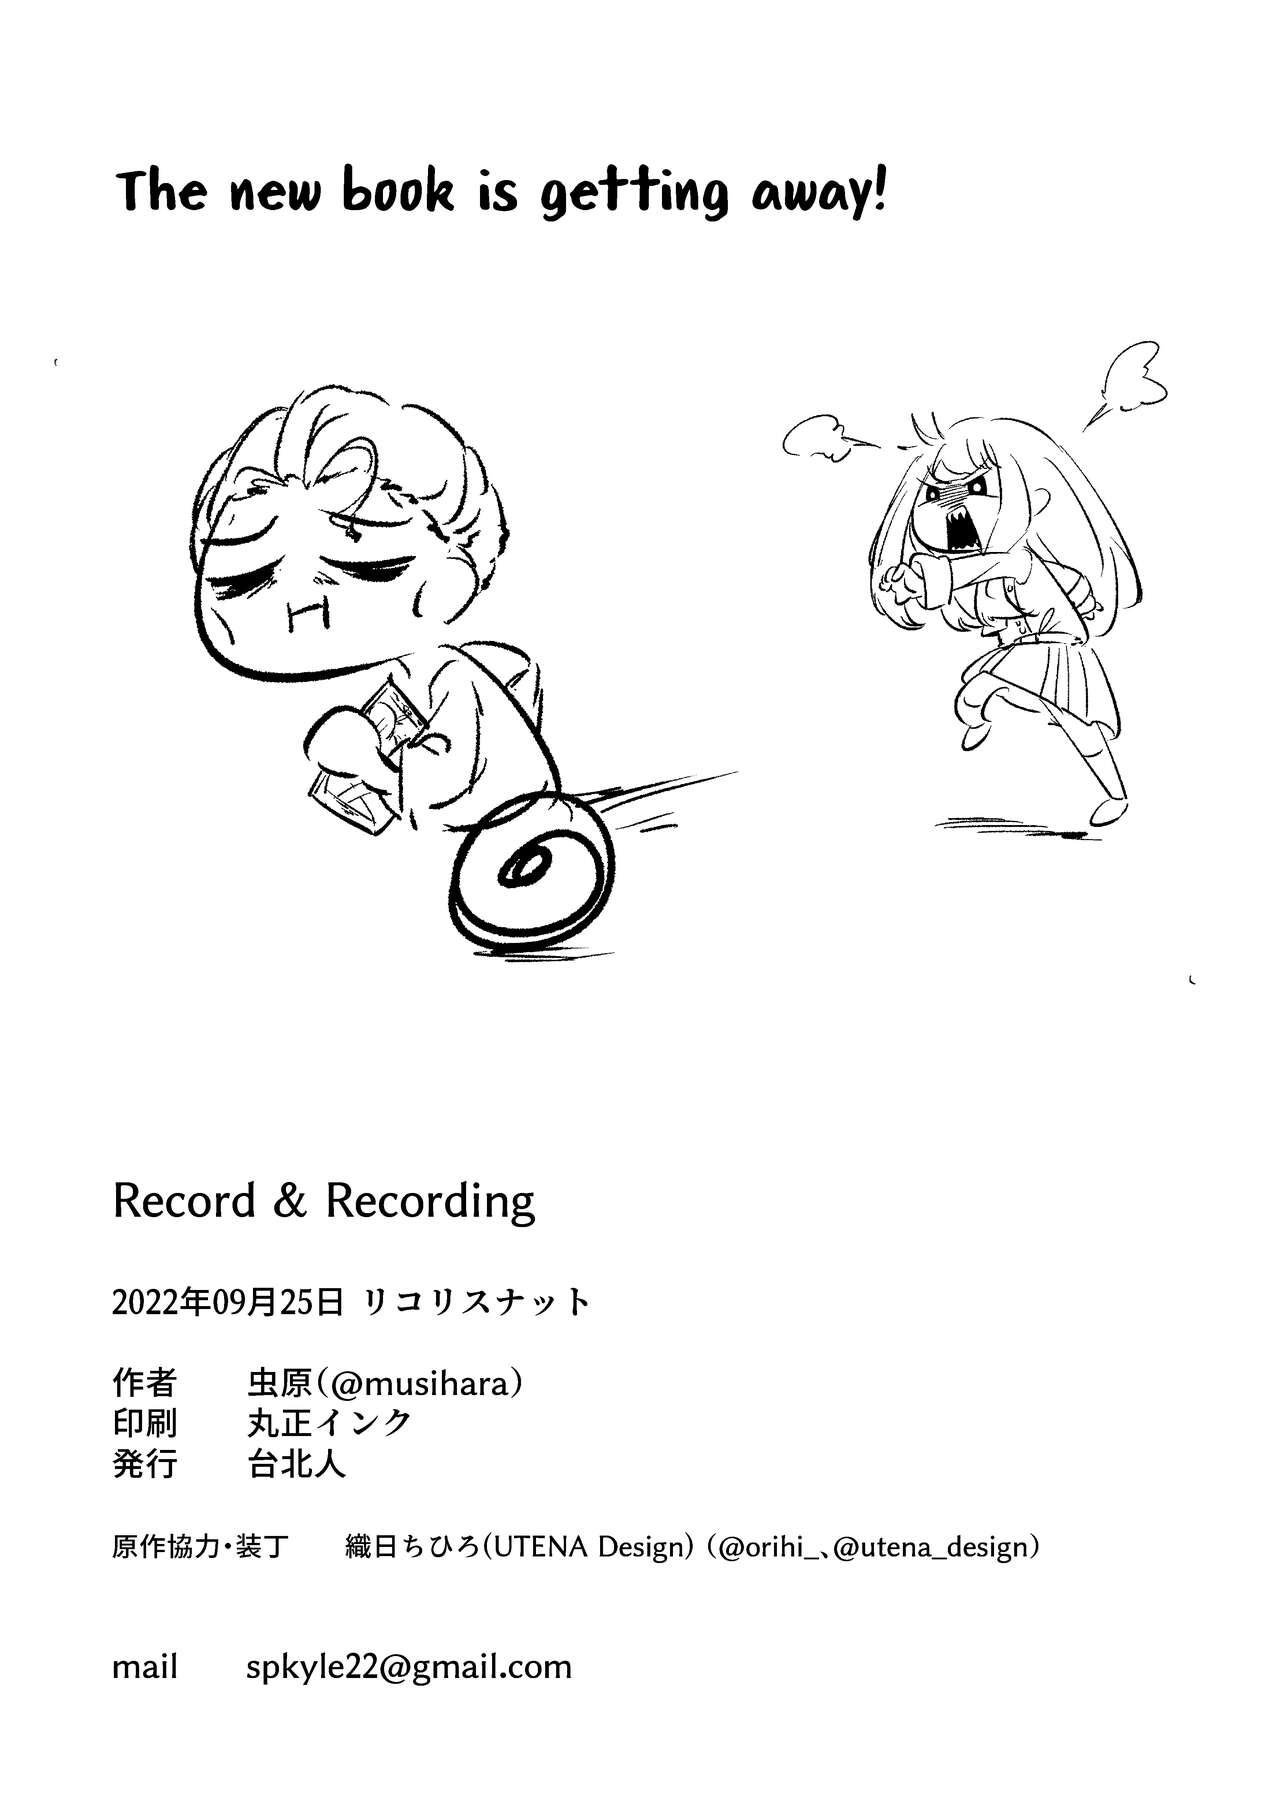 Record & Recording 21